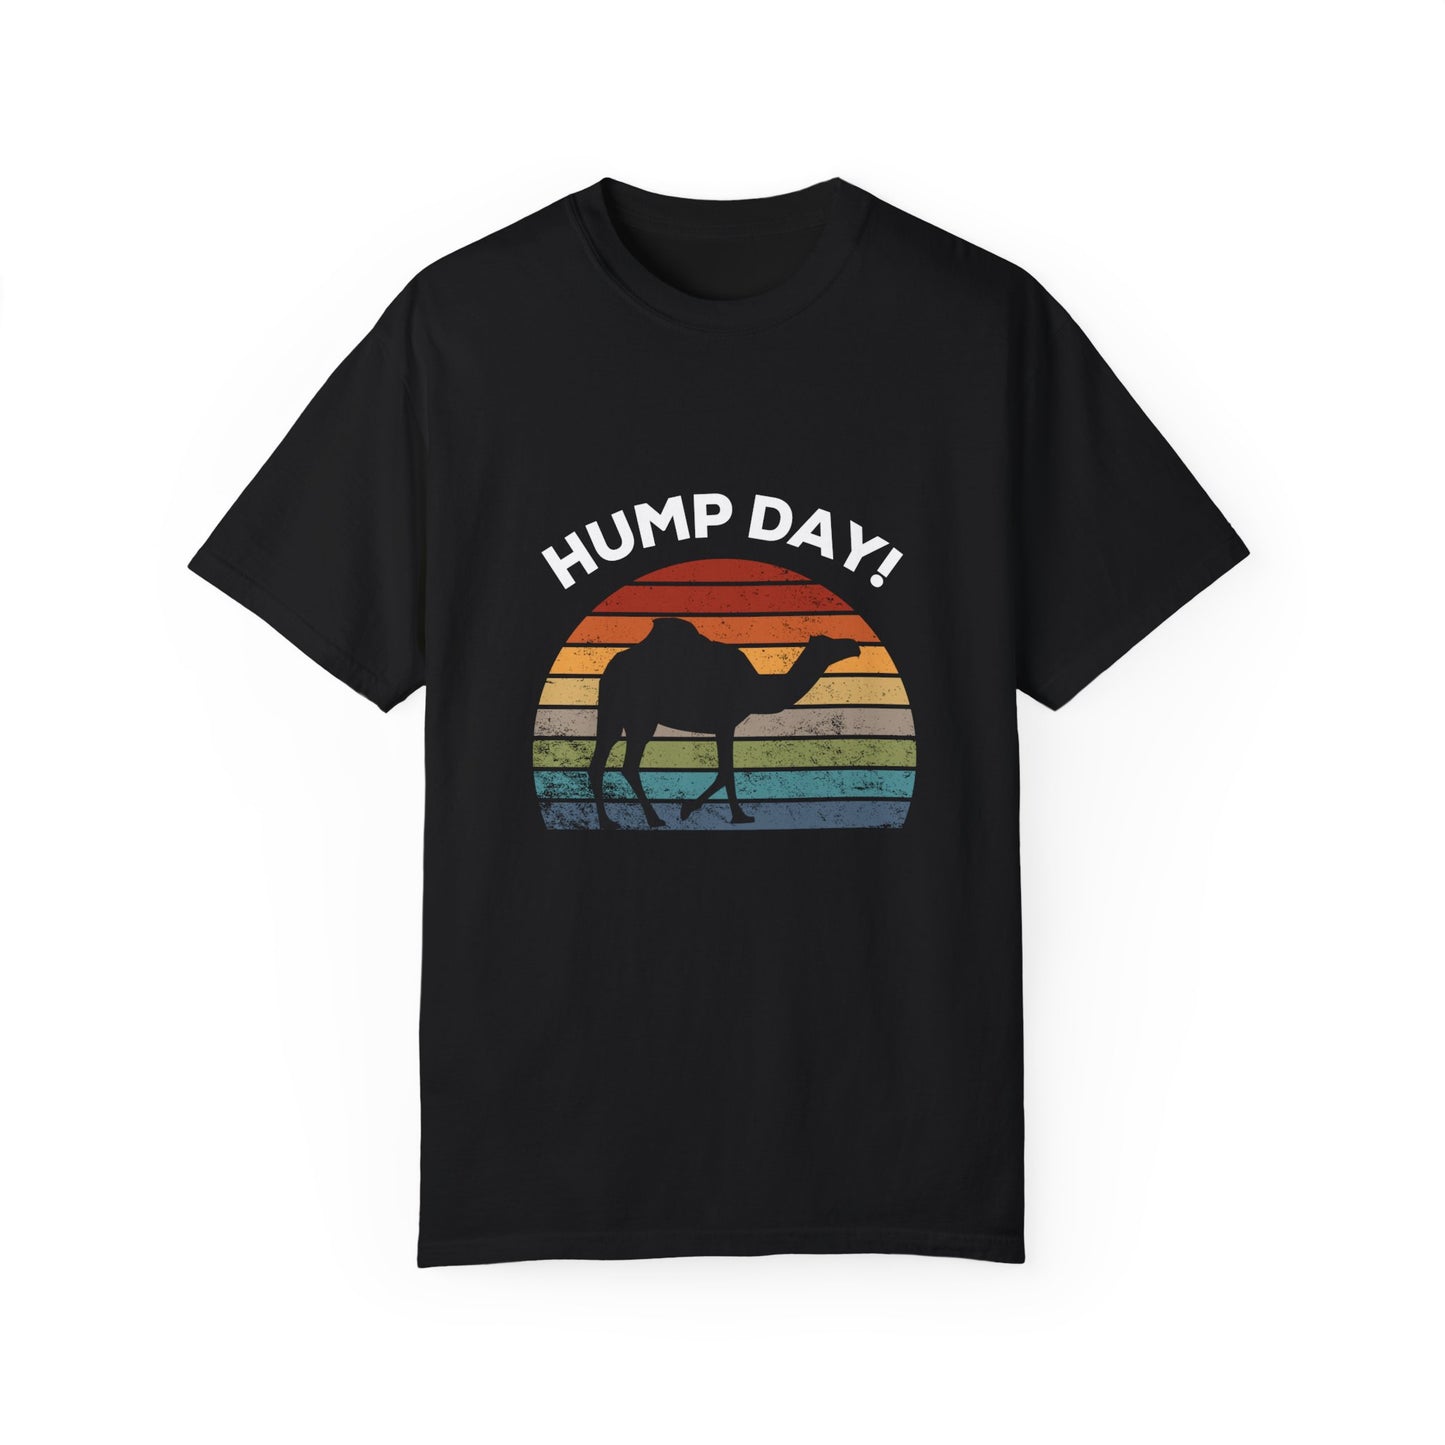 Vintage Hump Day Shirt